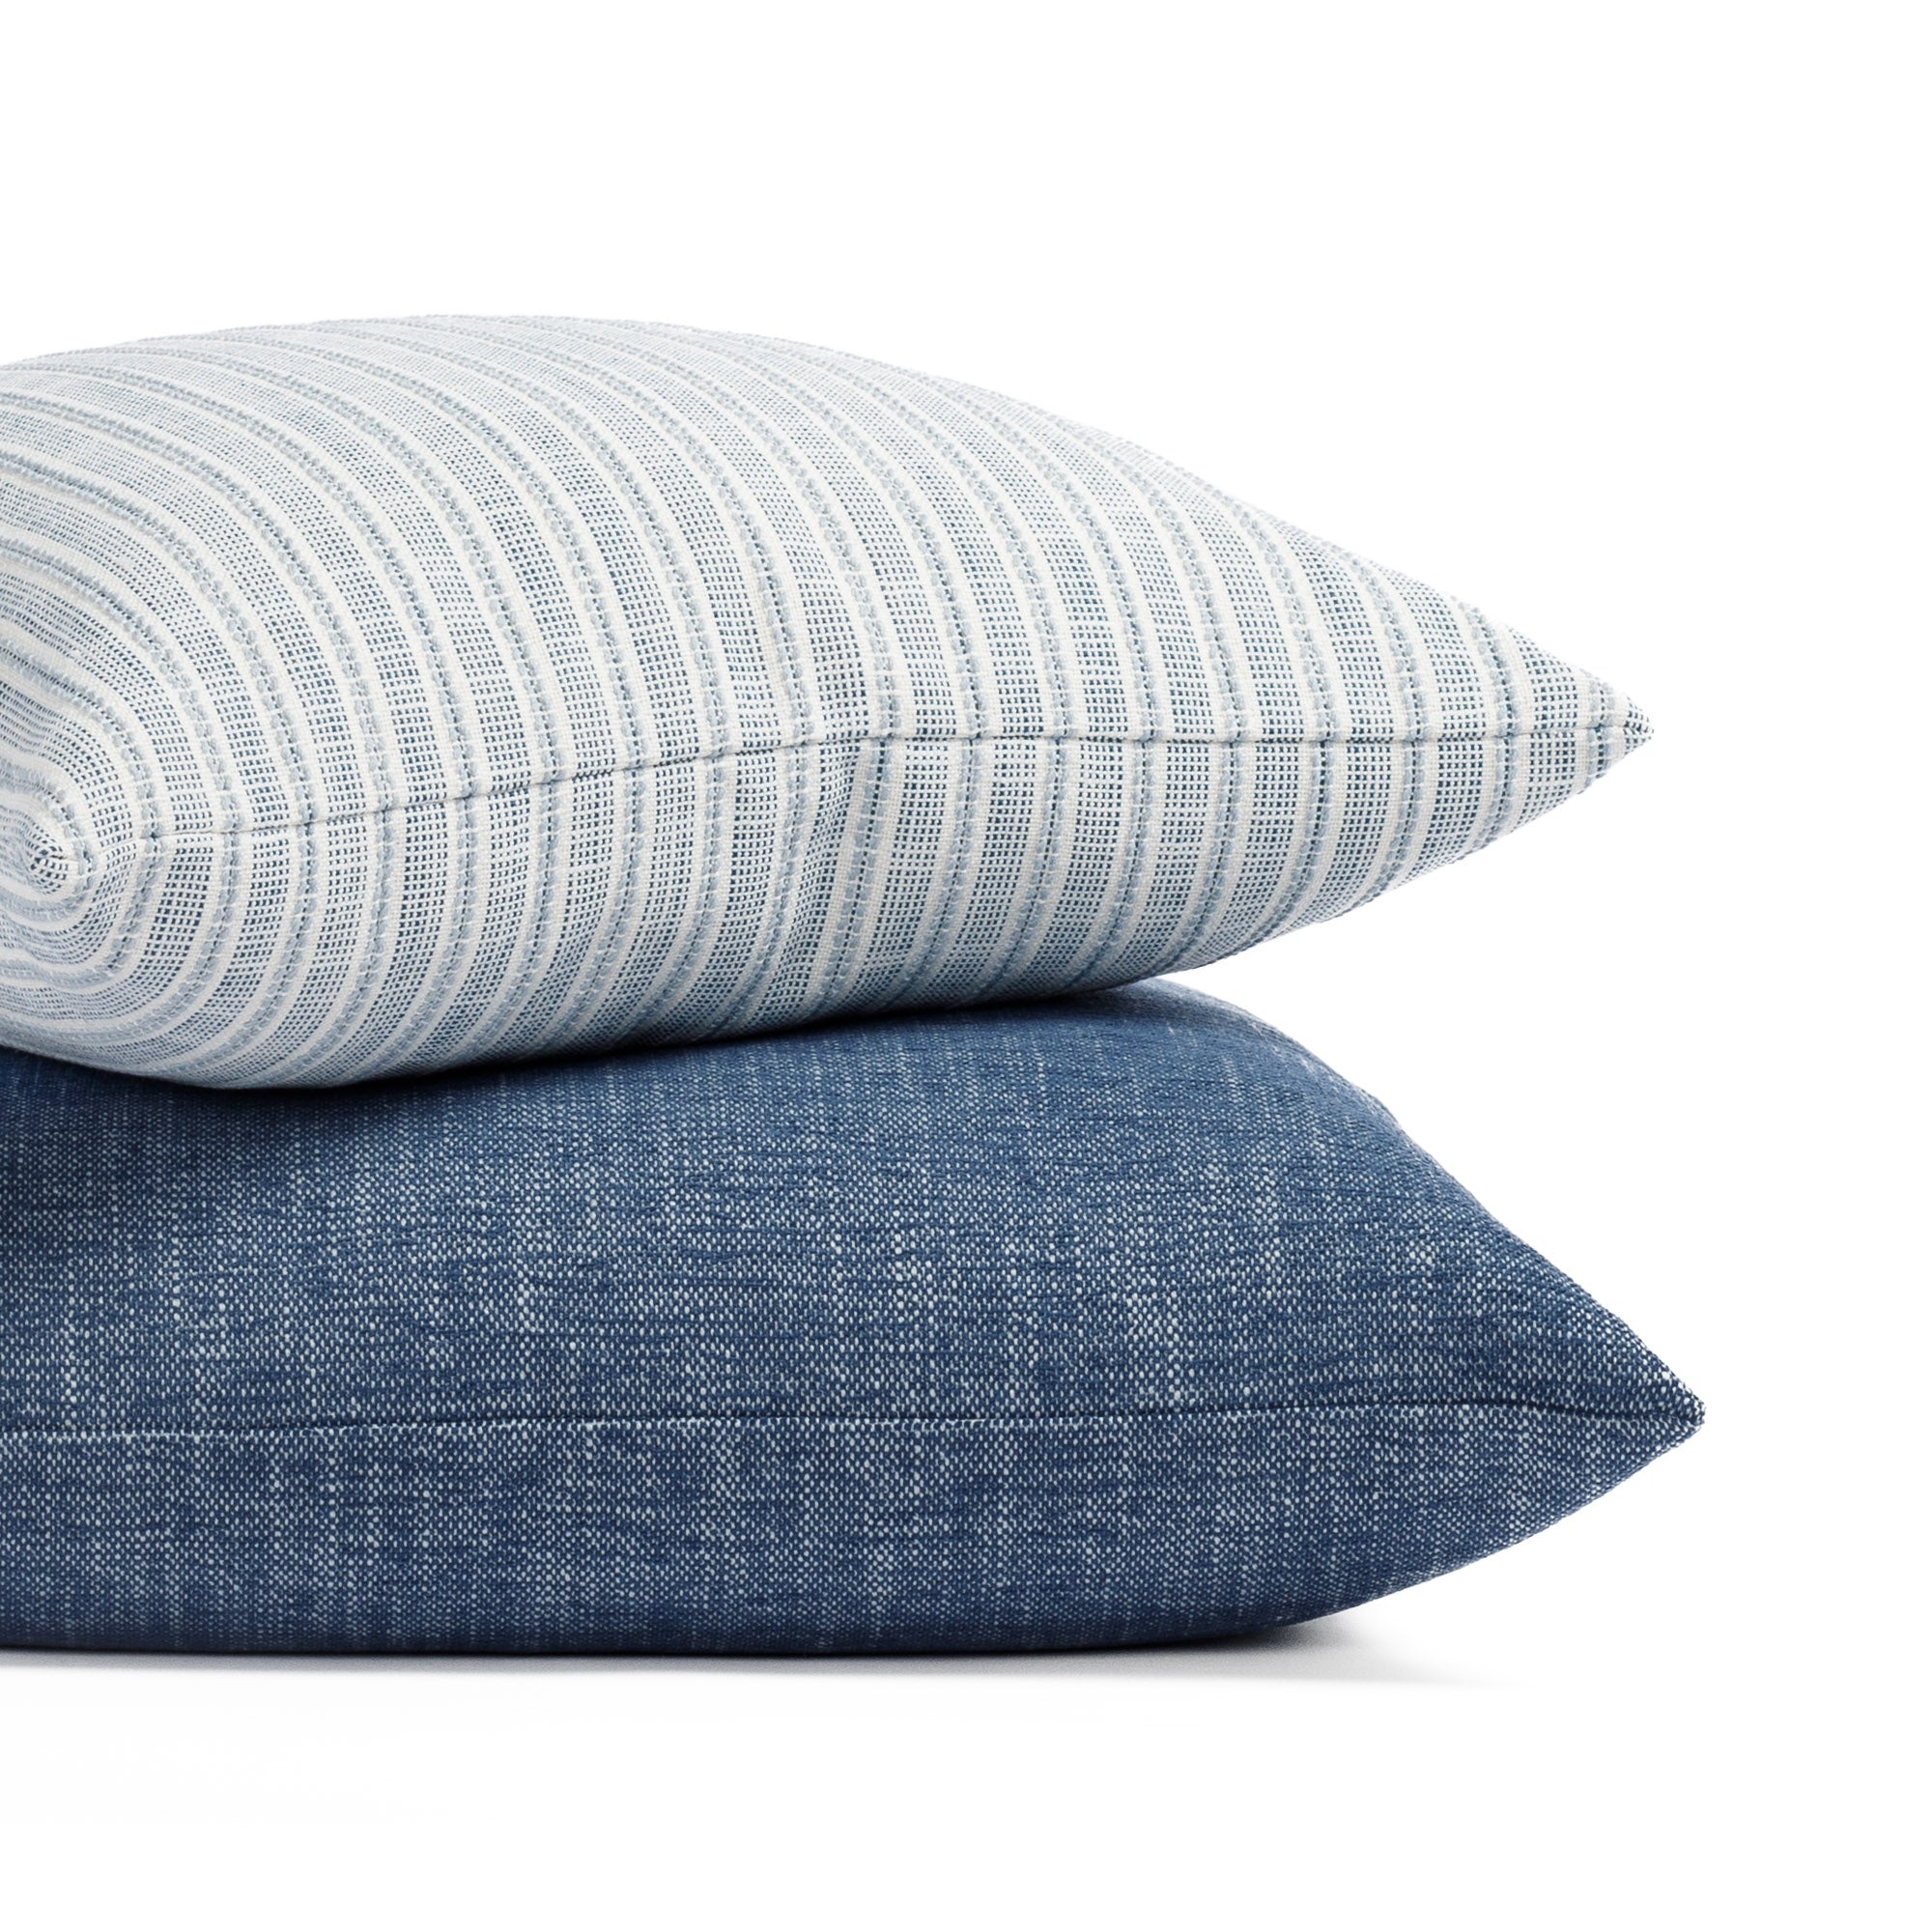 Tonic Living blue outdoor pillows - Amalfi Stripe and Parker Indigo pillows